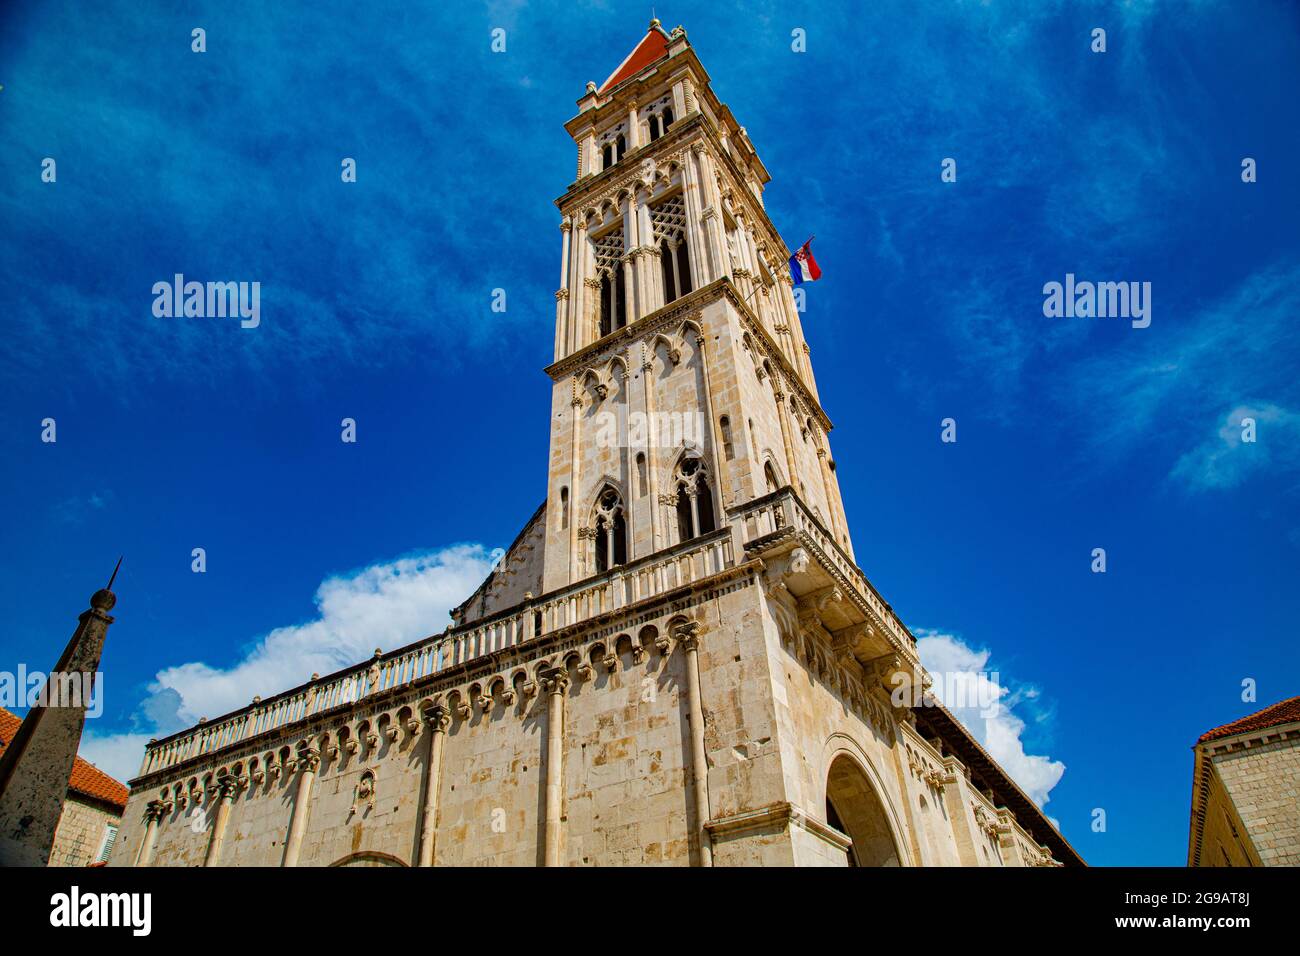 Trogir, pequeño pueblo muy pintoresco con calles medievales estrechas, murallas fortalezas e iglesias de arquitectura románico - góticas y calles. Stock Photo